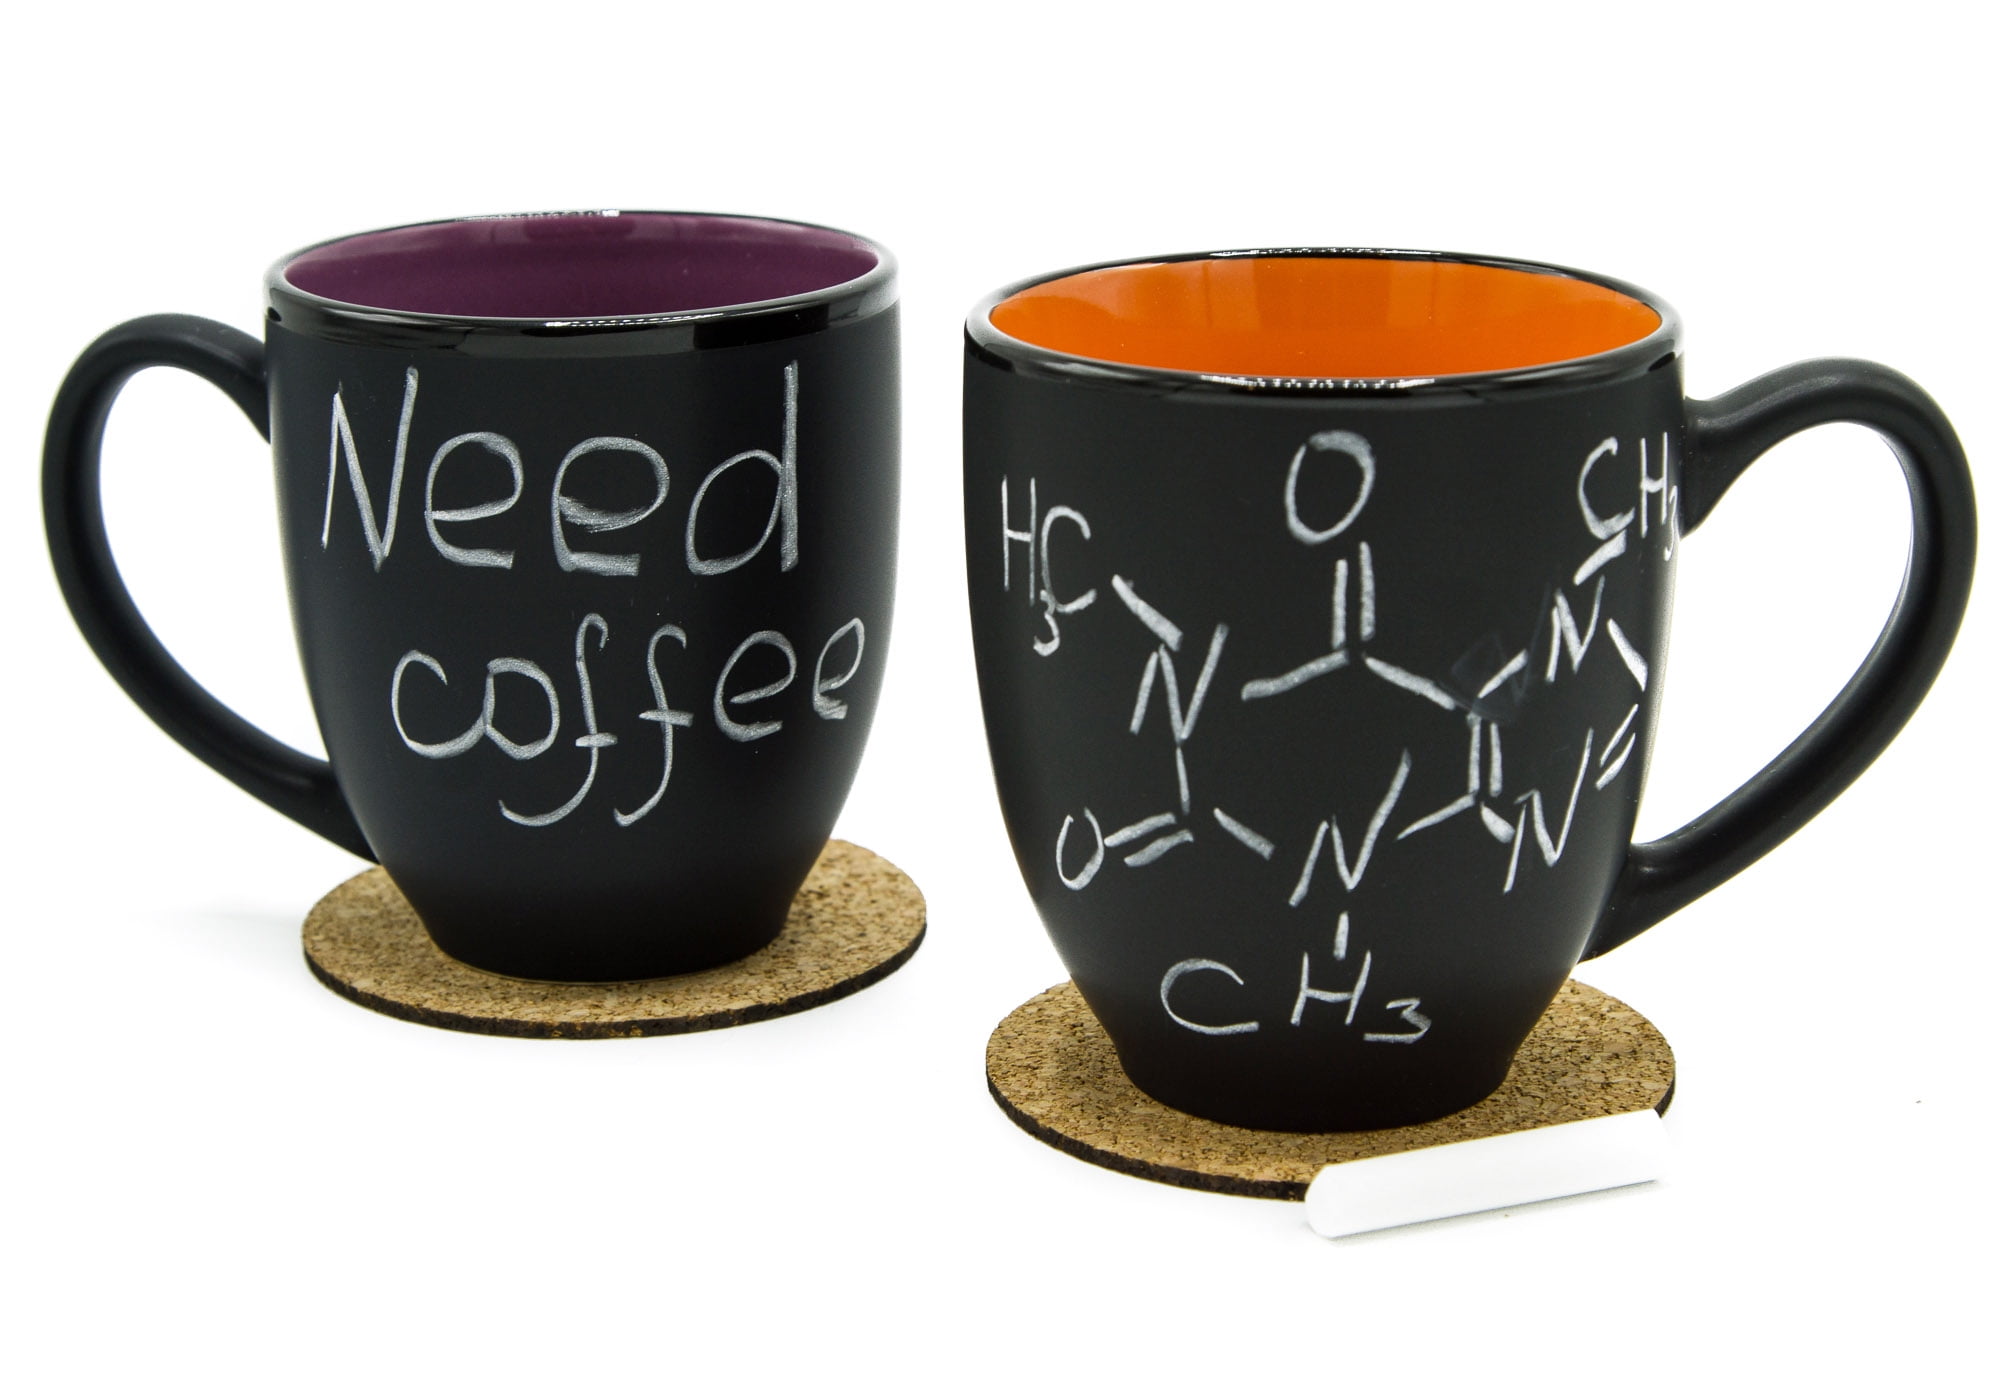 Coffee Academy Latte Mugs - Set of 4